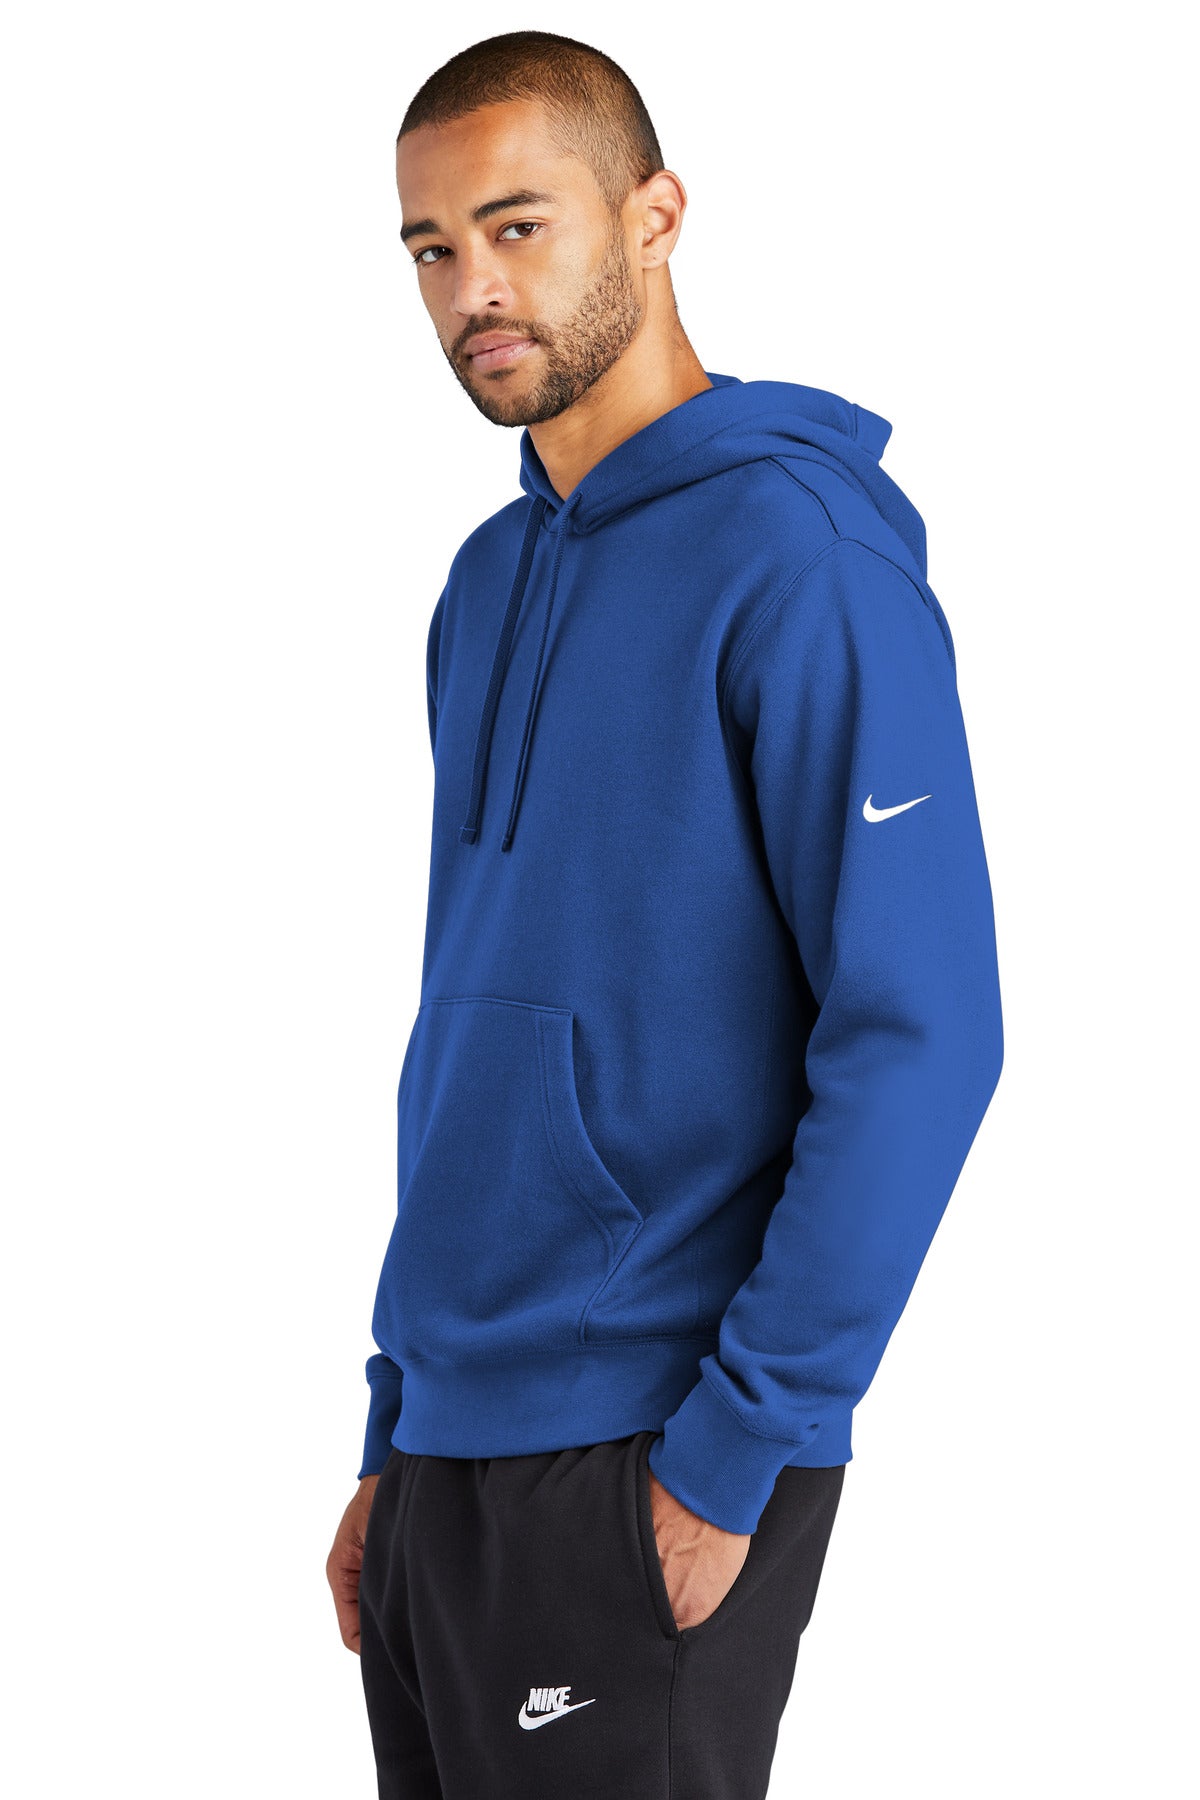 Moletom Nike Sportswear Club Crew Swoosh Azul - Compre Agora